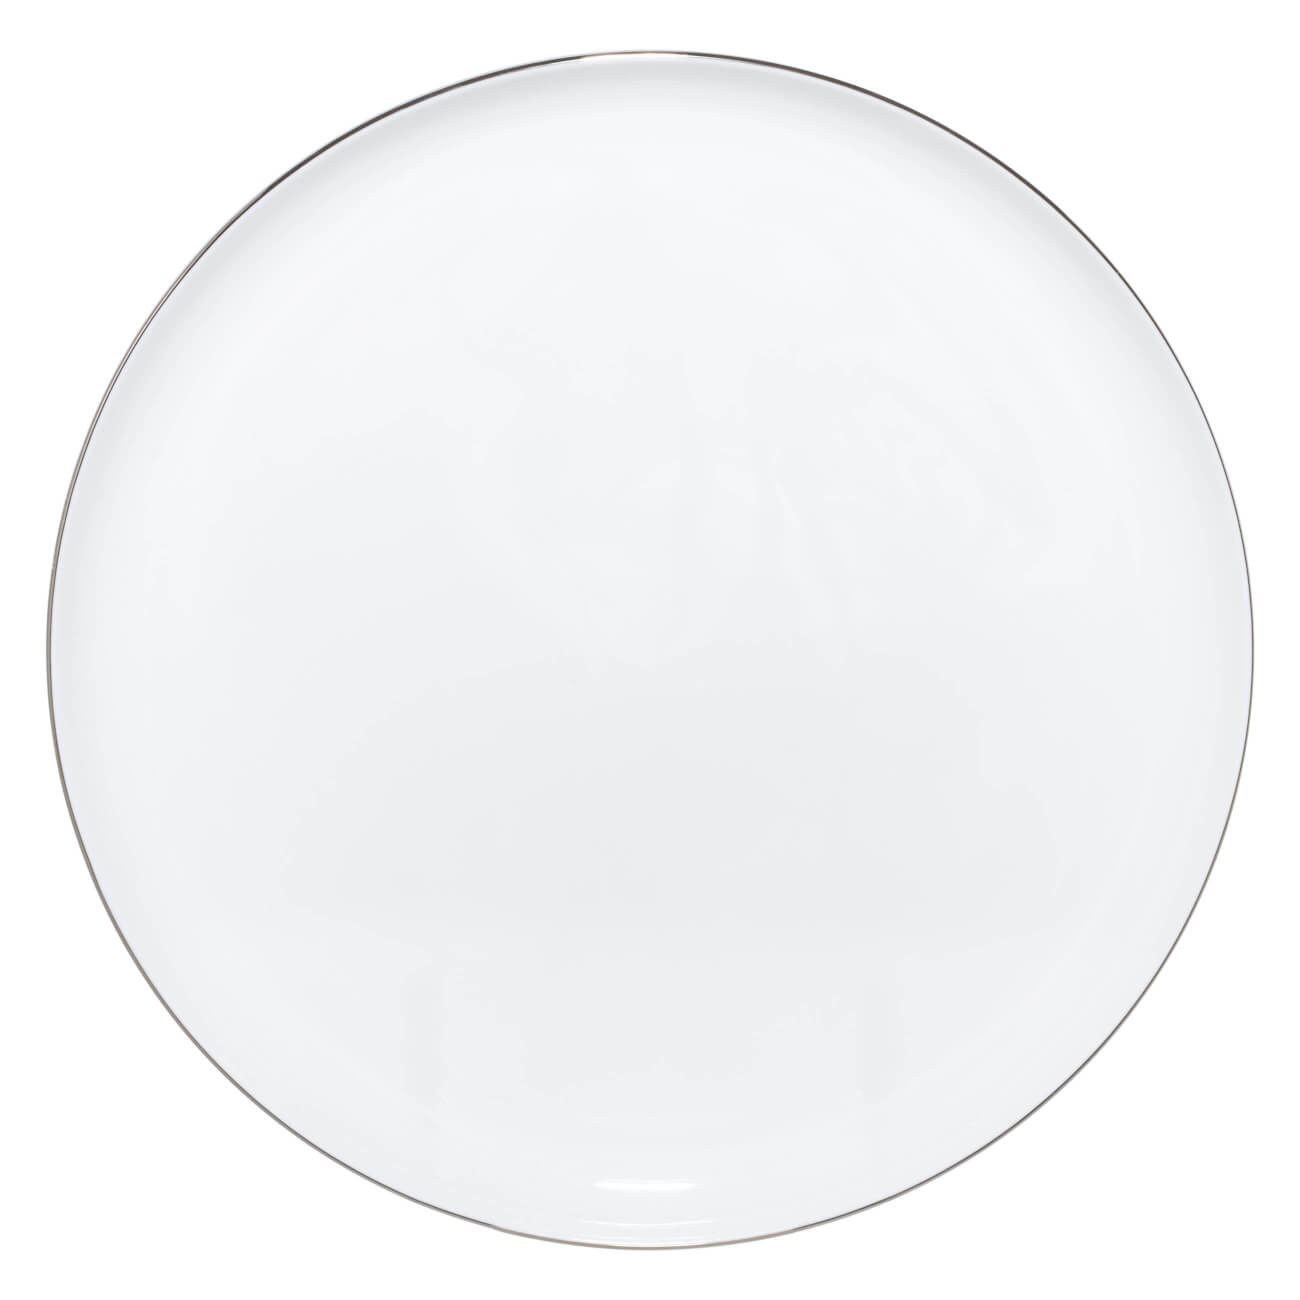 Тарелка обеденная, 28 см, фарфор F, Antarctica тарелка обеденная 26 см фарфор f белая ideal white